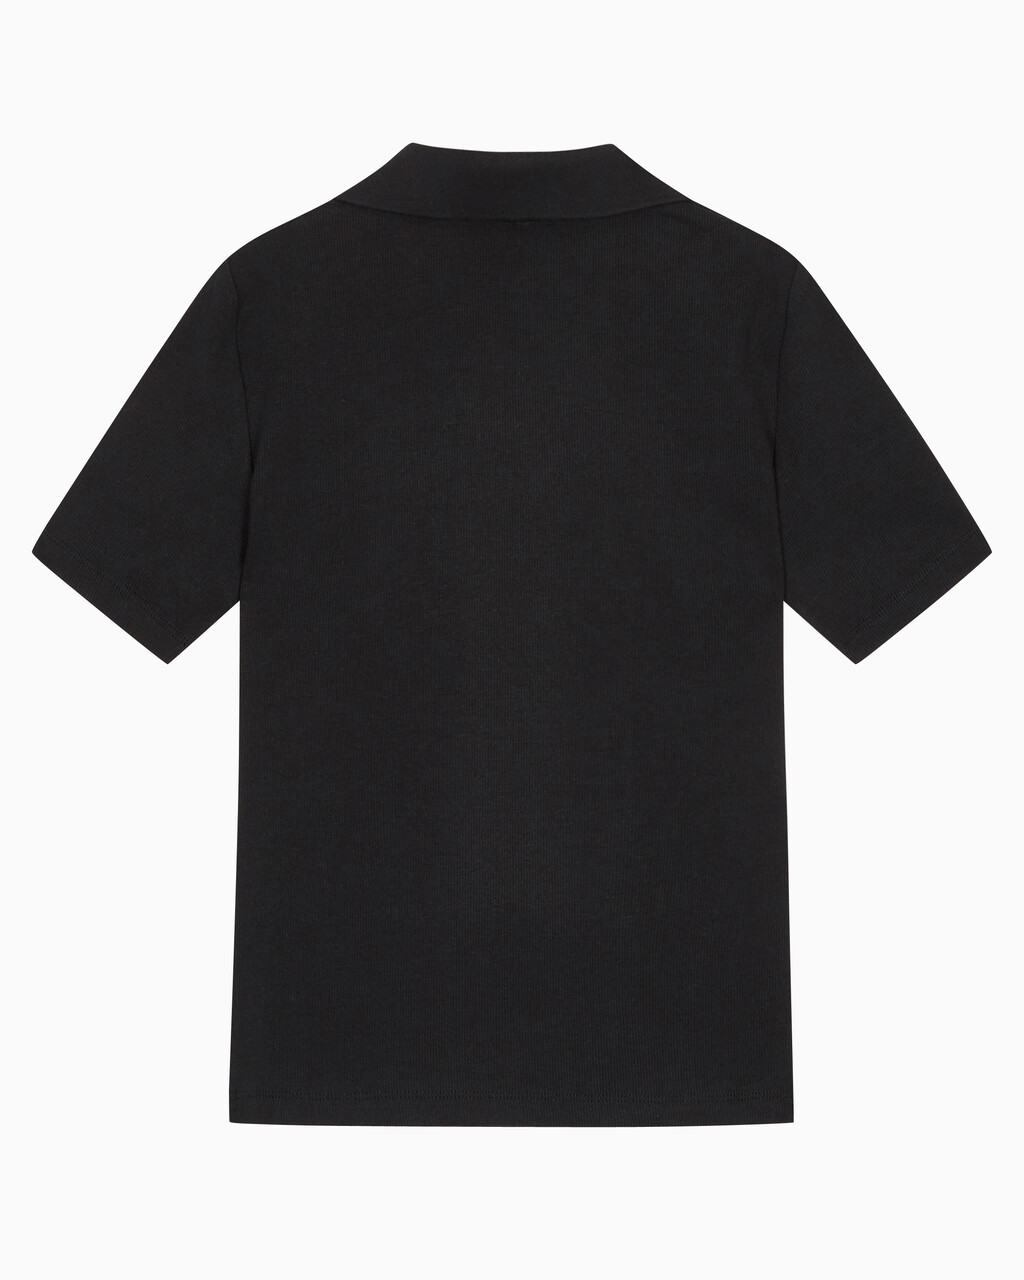 Buy 여성 슬림핏 립 브이넥 폴로 티셔츠 in color CK BLACK